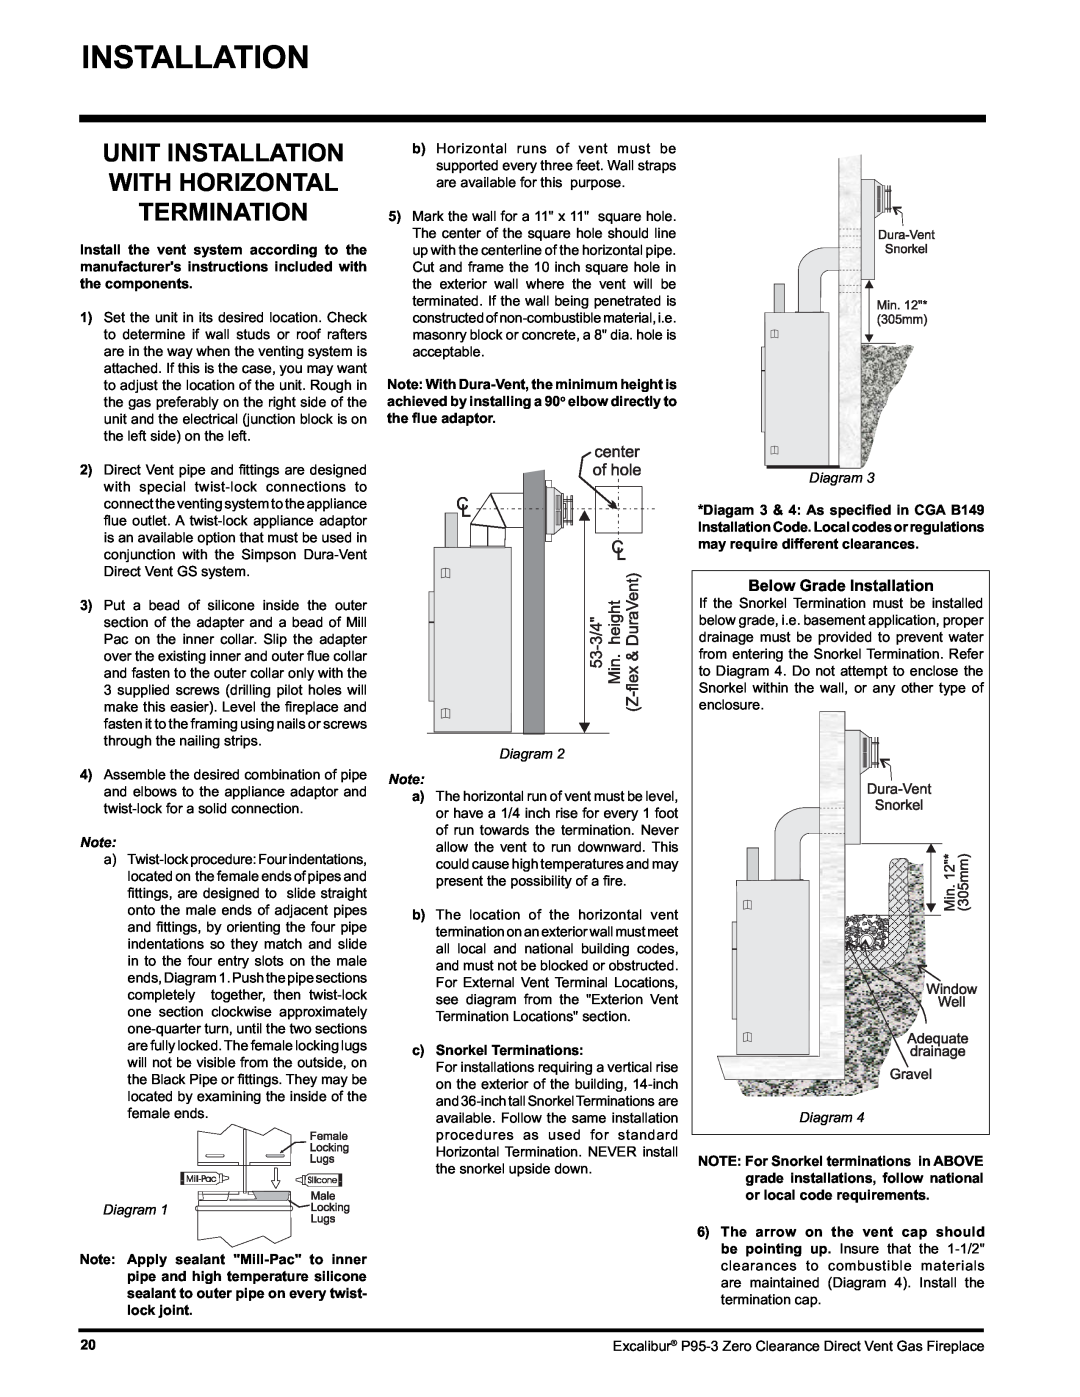 Excalibur electronic P95-NG3, P95-LP3 Unit Installation With Horizontal Termination, Diagram, cSnorkel Terminations 